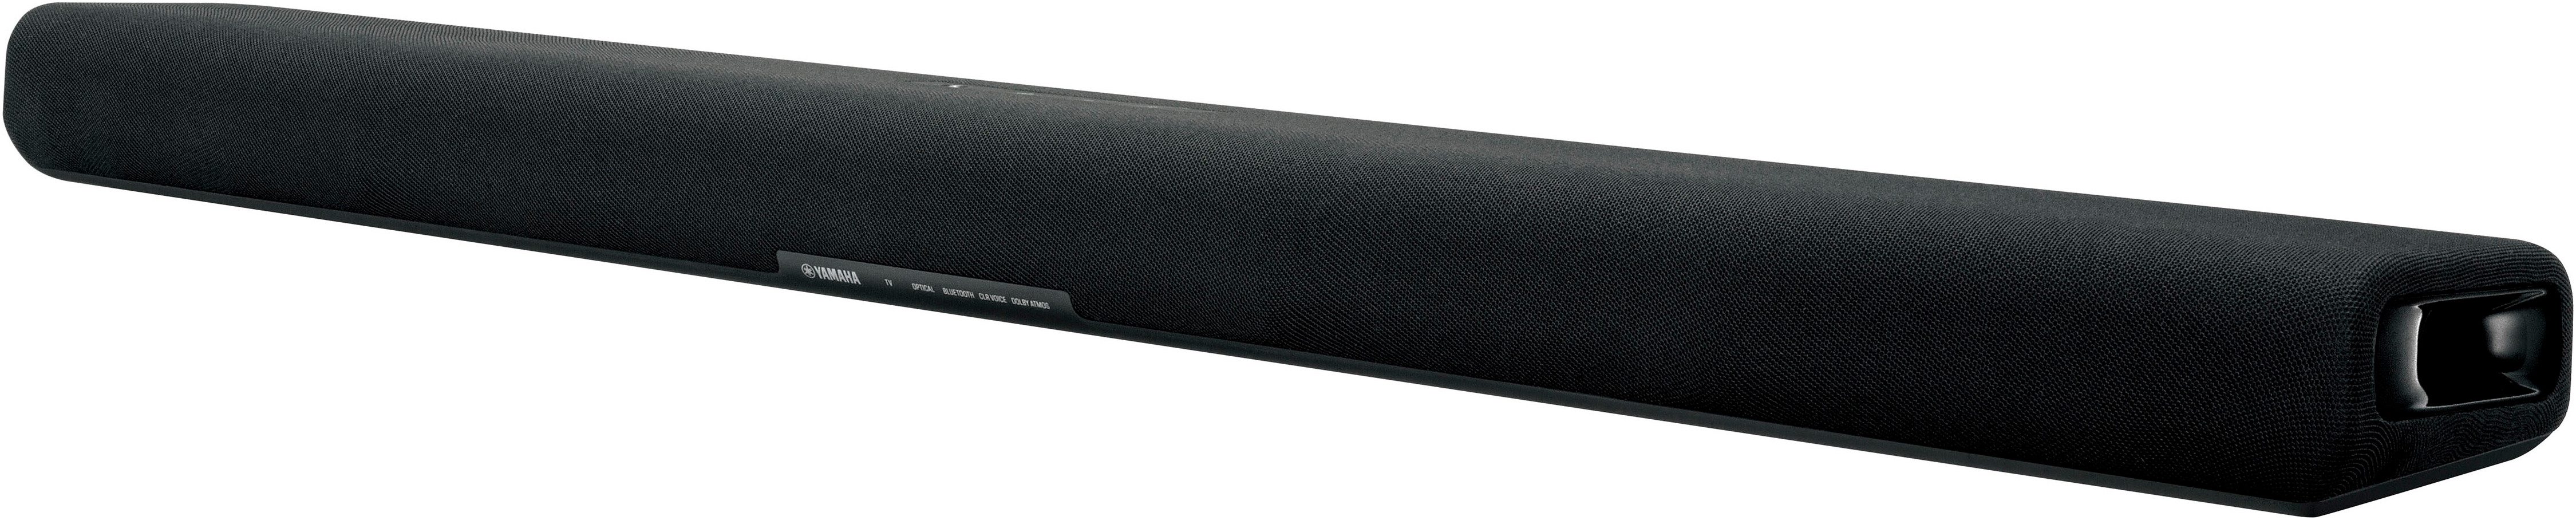 Yamaha SR-B30A Stereo Soundbar (Bluetooth, 120 W)